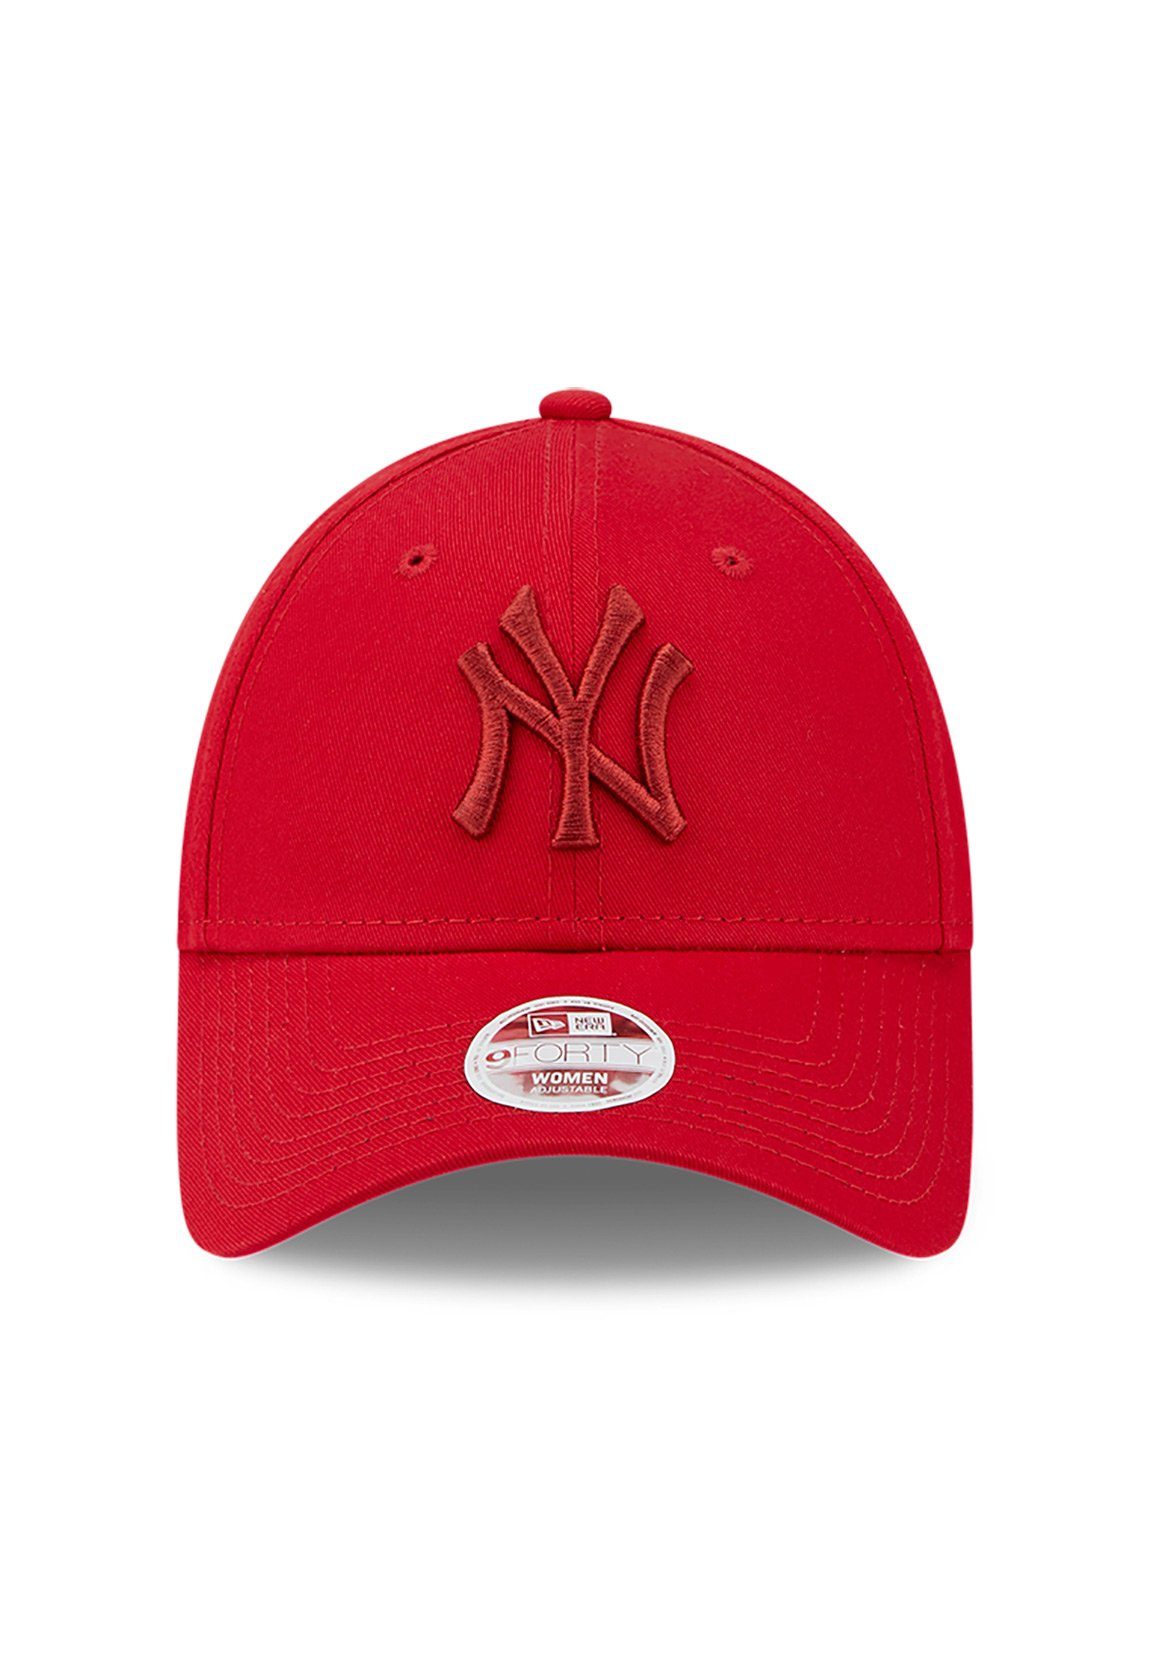 NY Ess League Era Wmns Adjustable Rot YANKEES Cap Era New Damen Cap Baseball New 9Forty